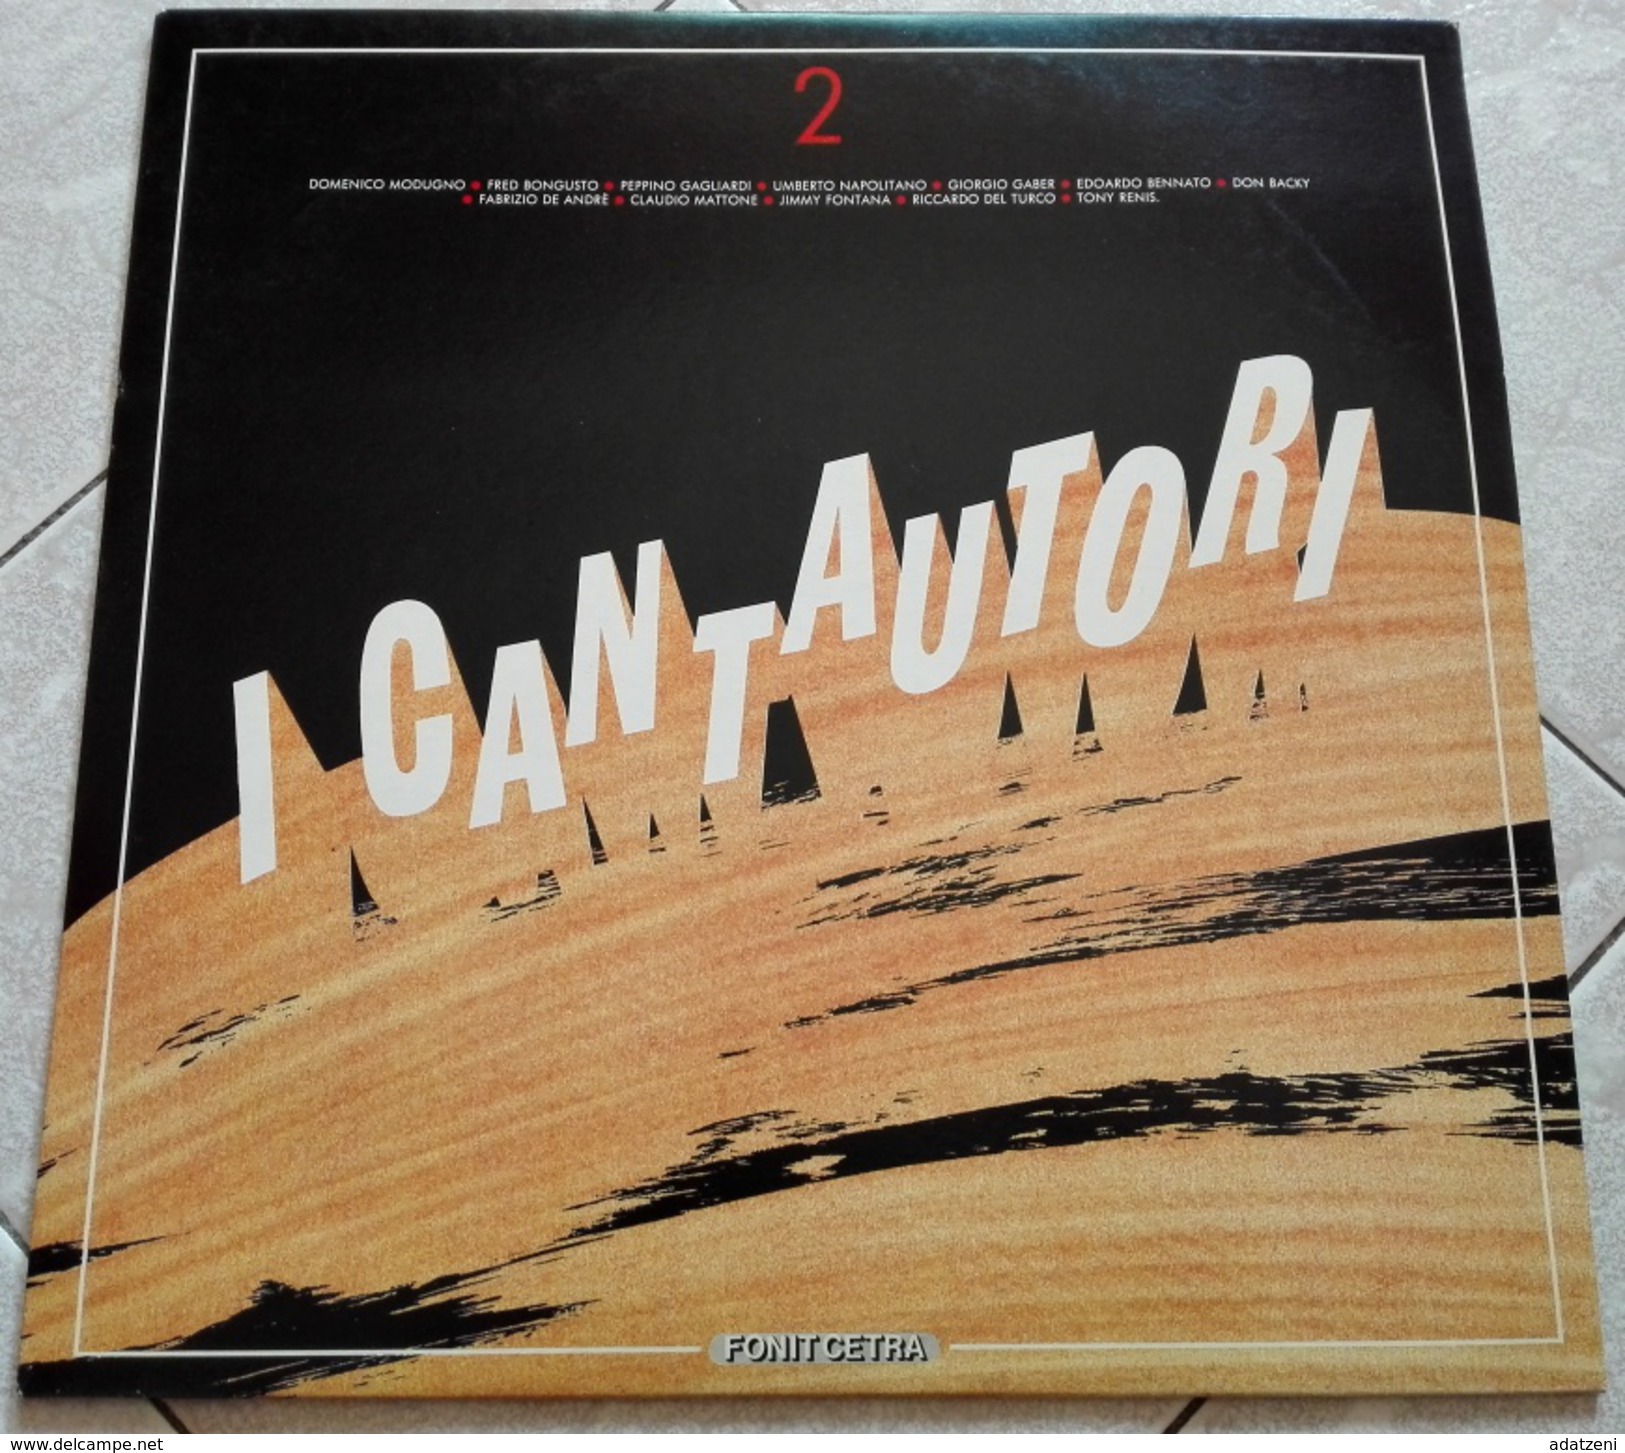 ARTISTI VARI  RACCOLTA I CANTAUTORI VOLUME 2 Disco LP 33 Giri - Other - Italian Music